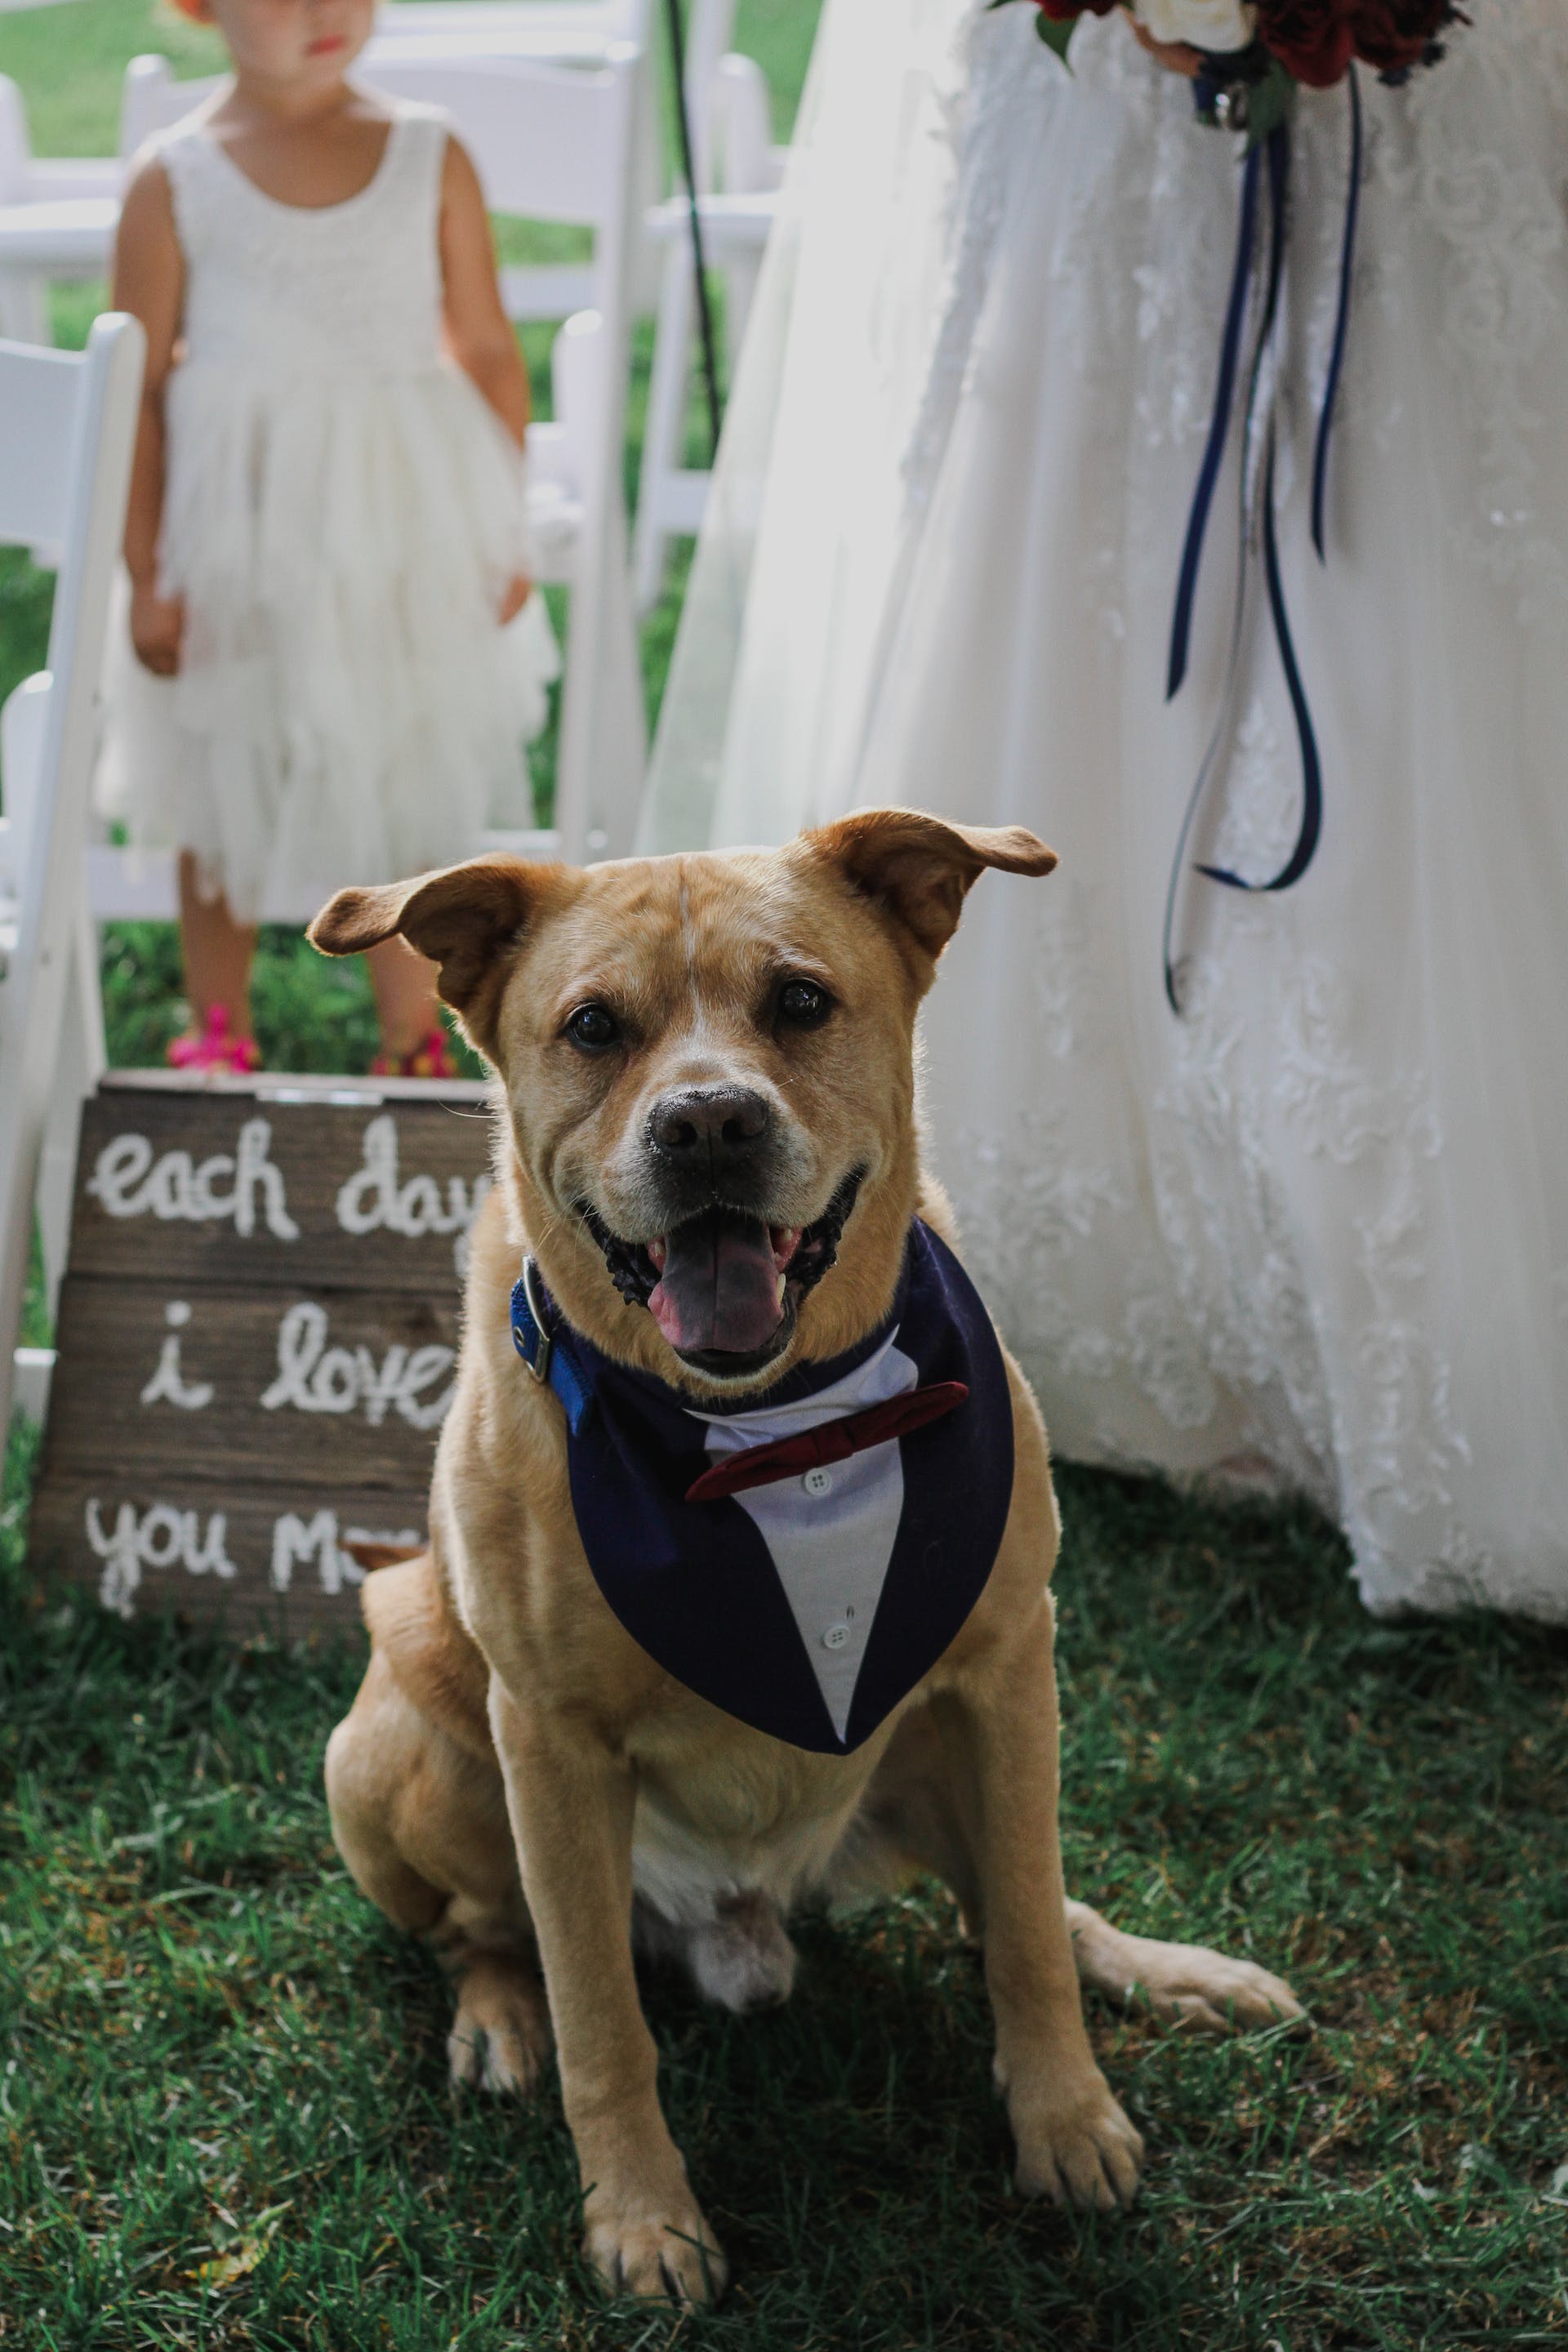 A dog at a wedding | Source: Pexels